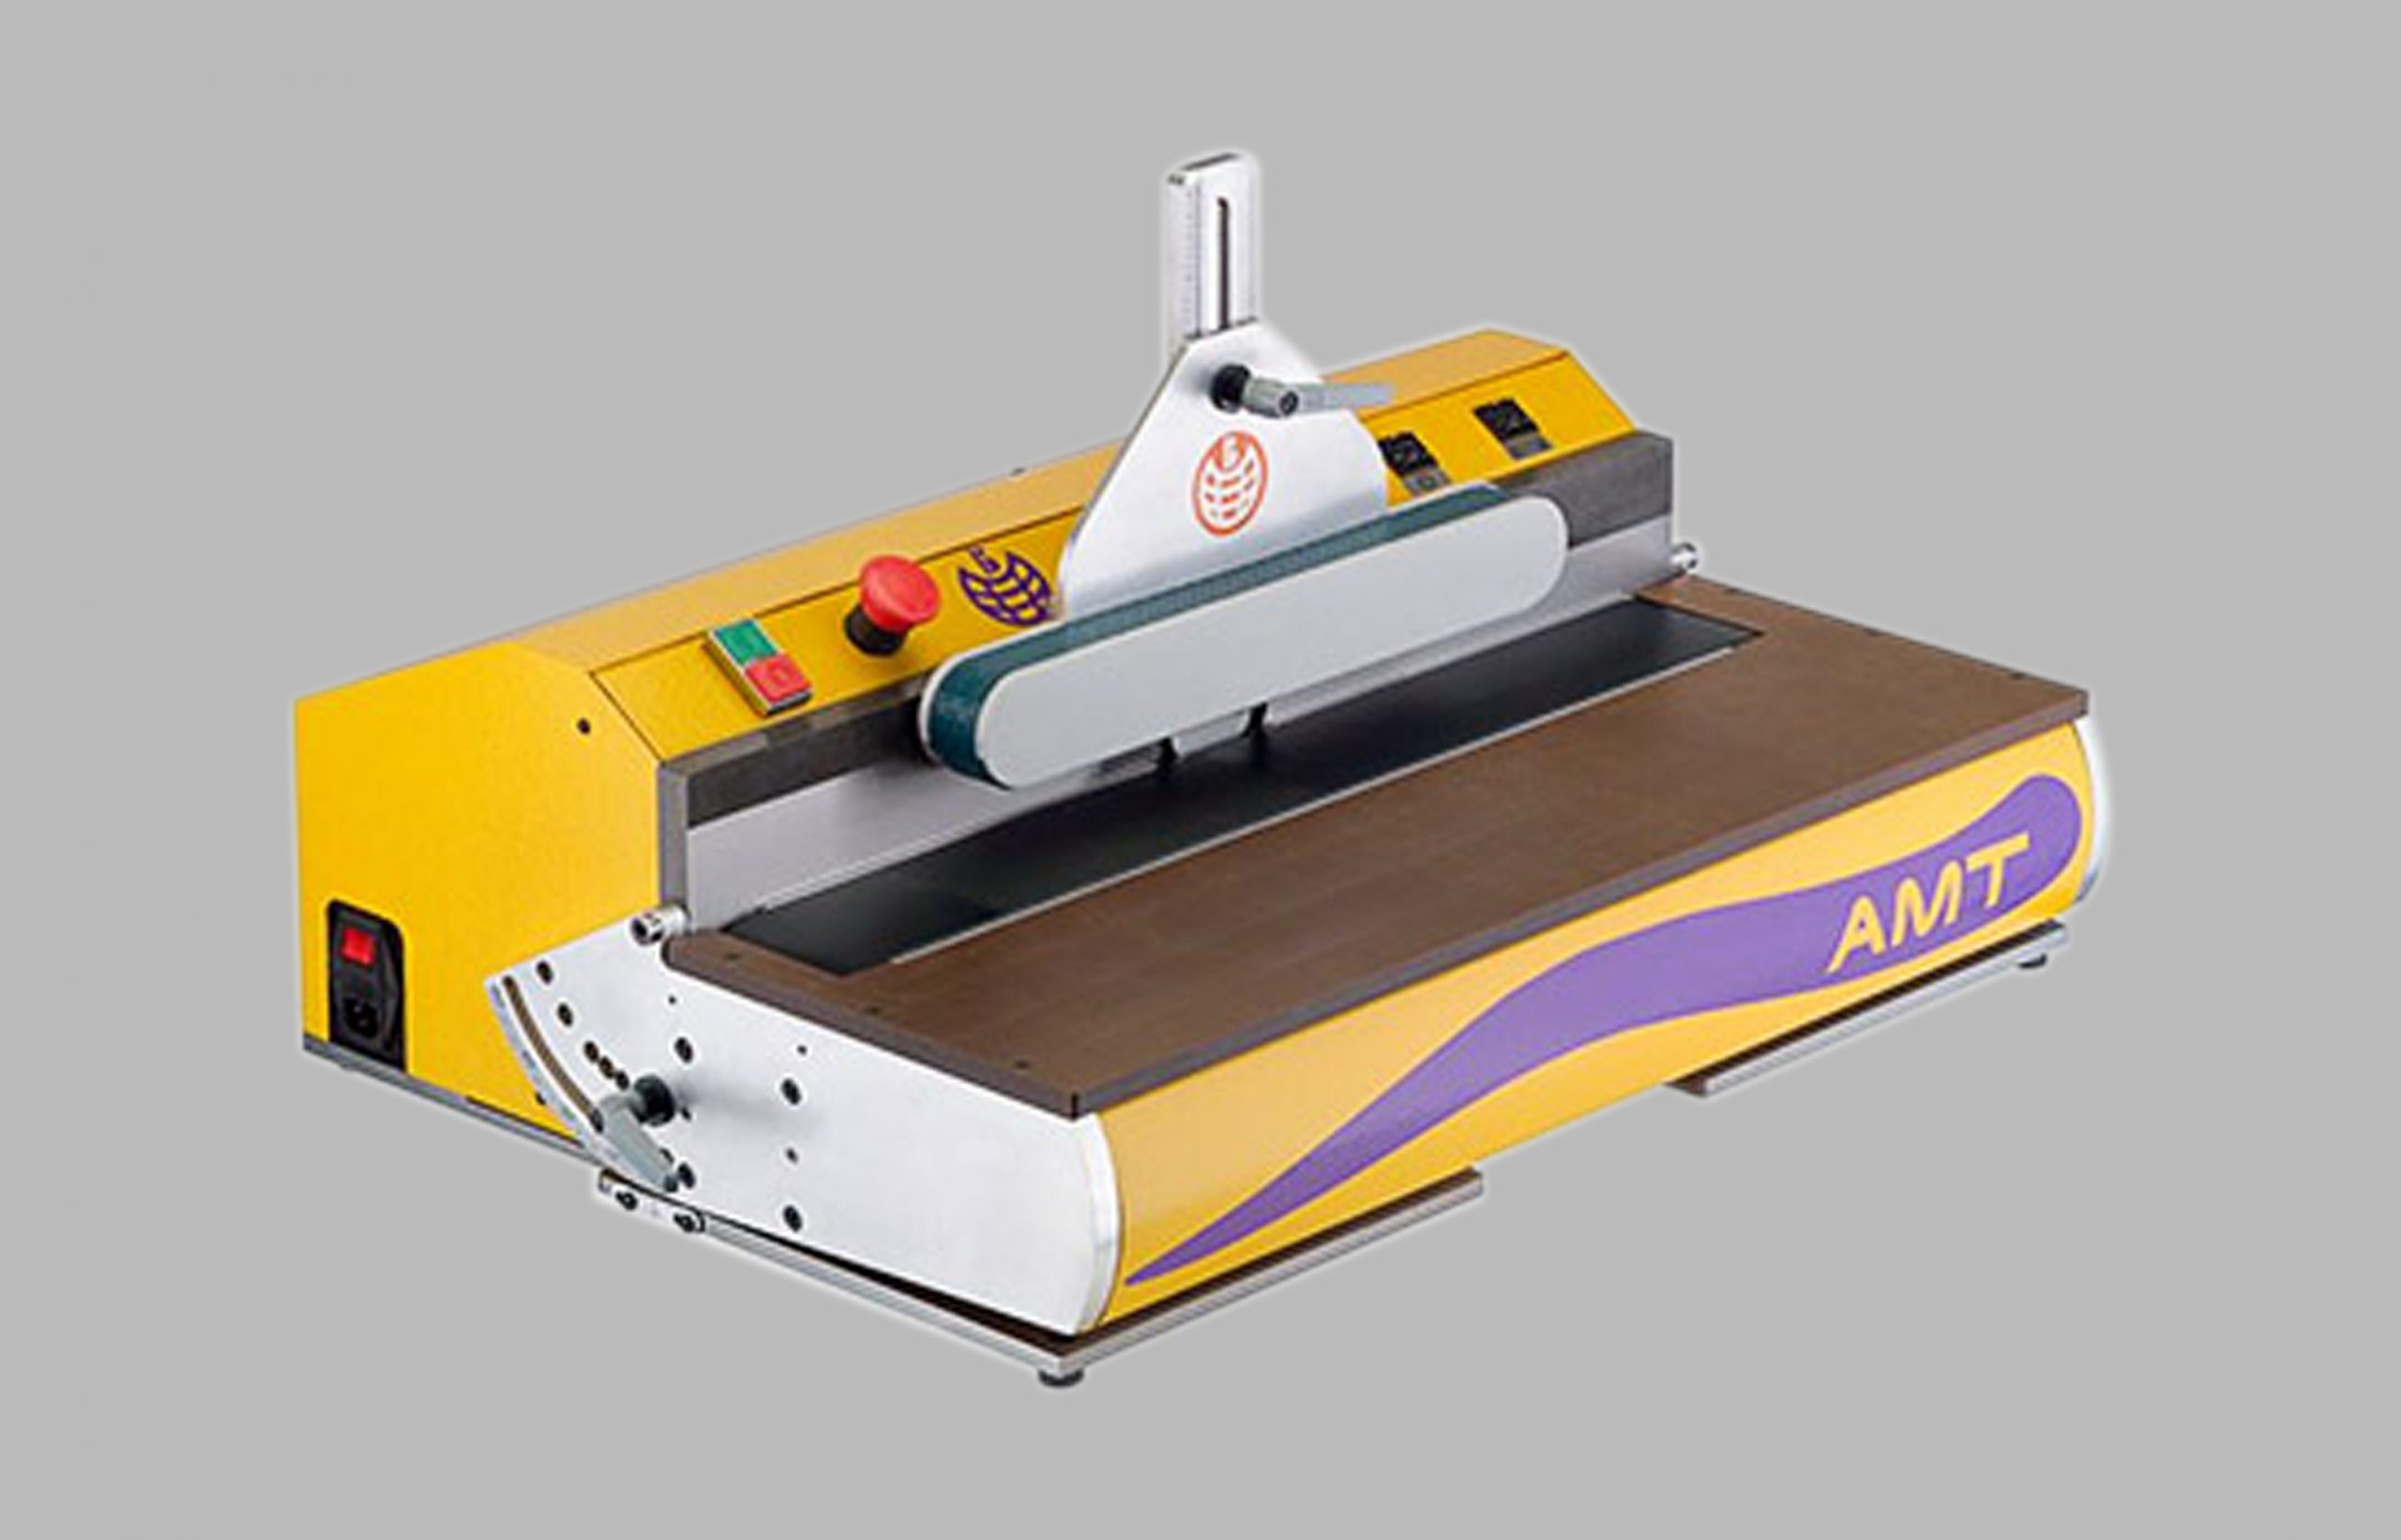 AMT, diamond polishing machine, edge polisher of plastic sheet